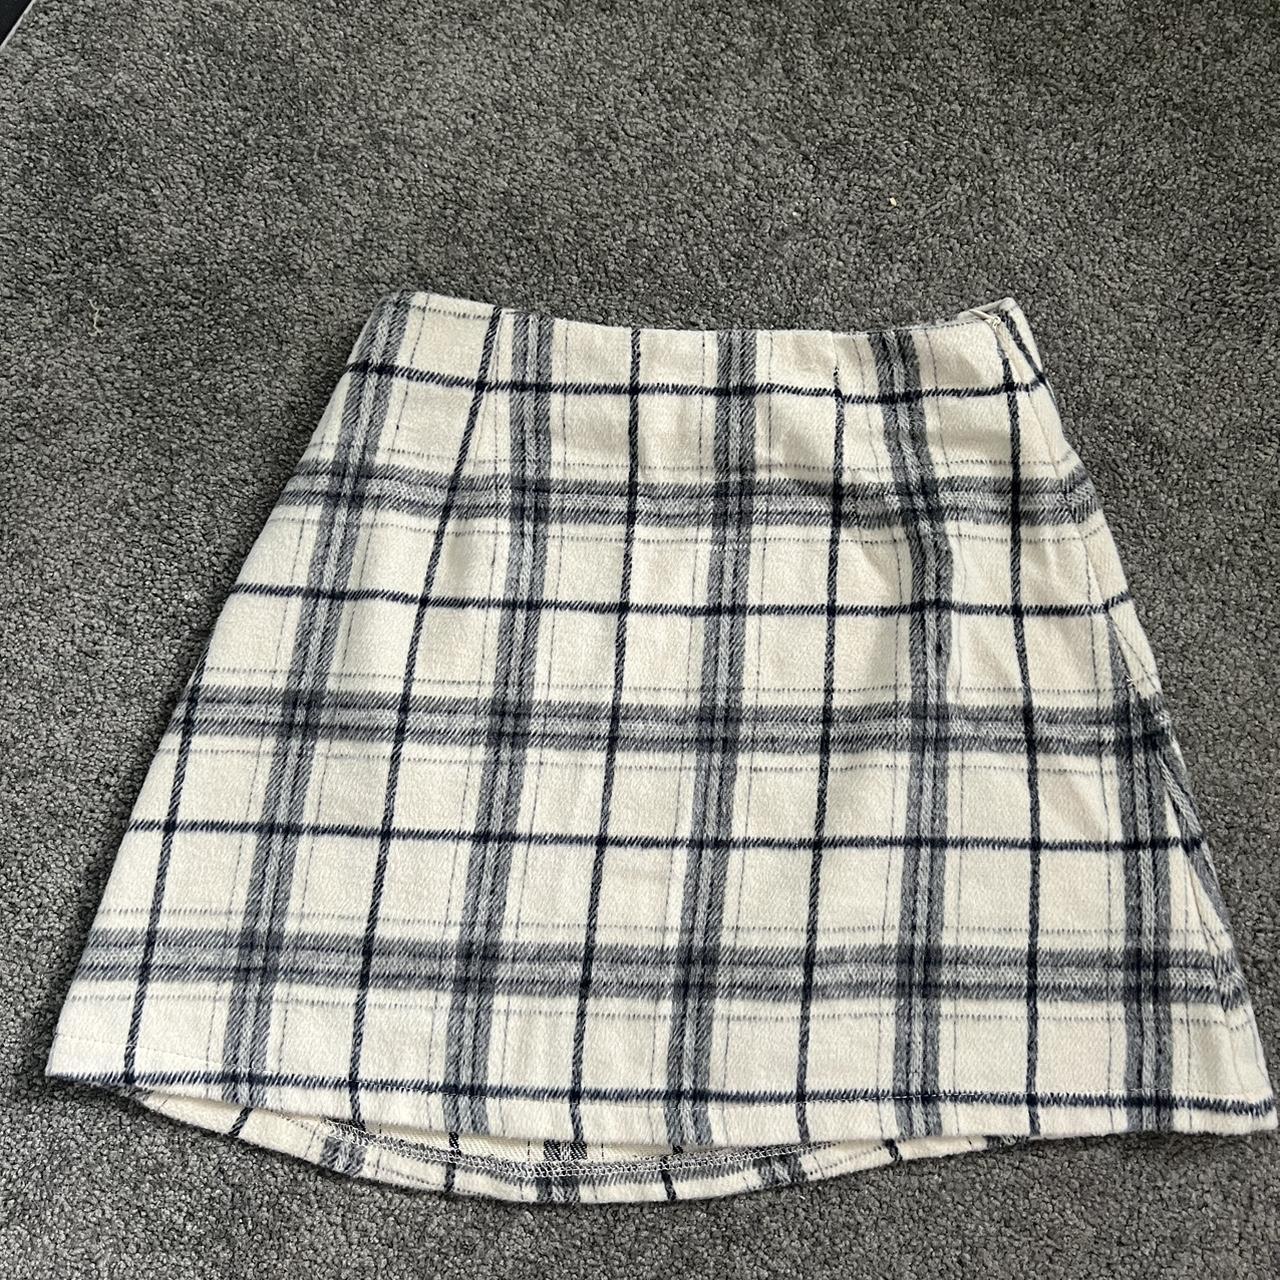 Princess Polly mini skirt Size 6 - Depop